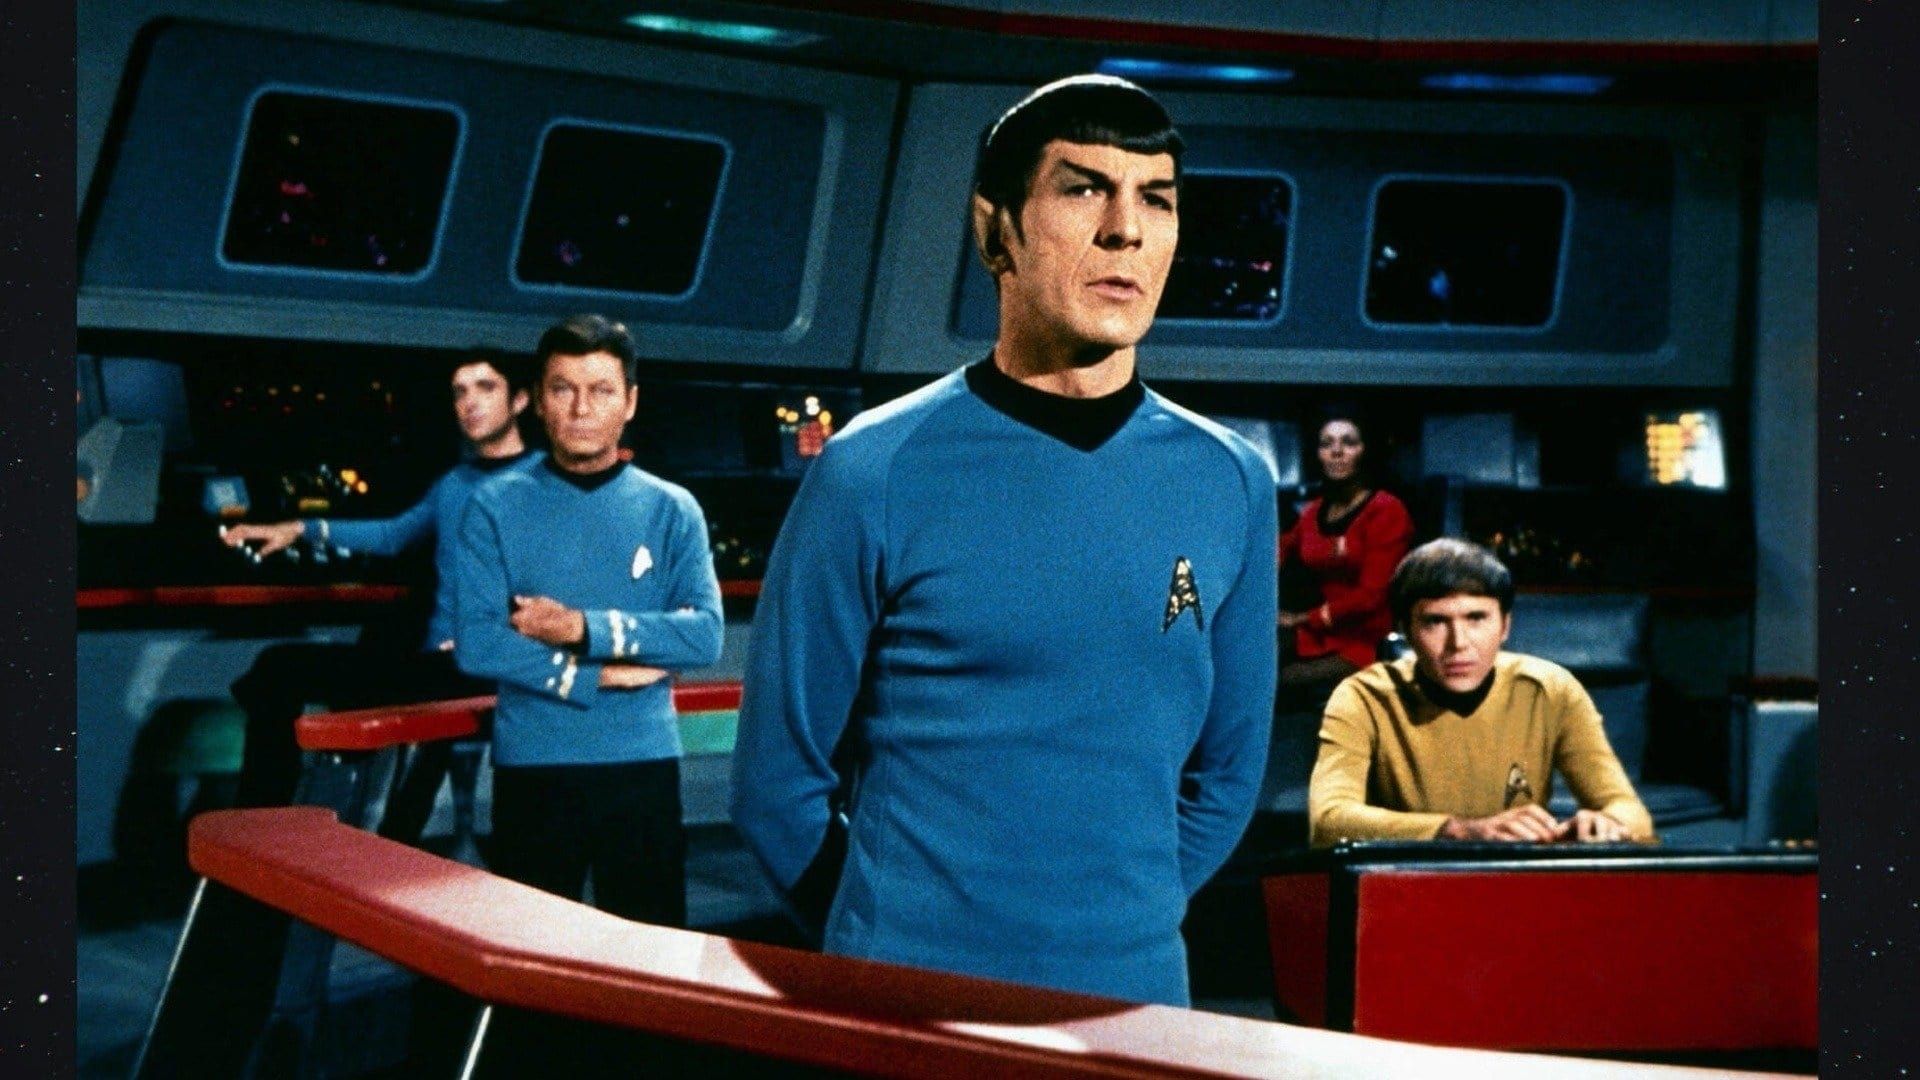 The Center Seat: 55 Years of Star Trek background